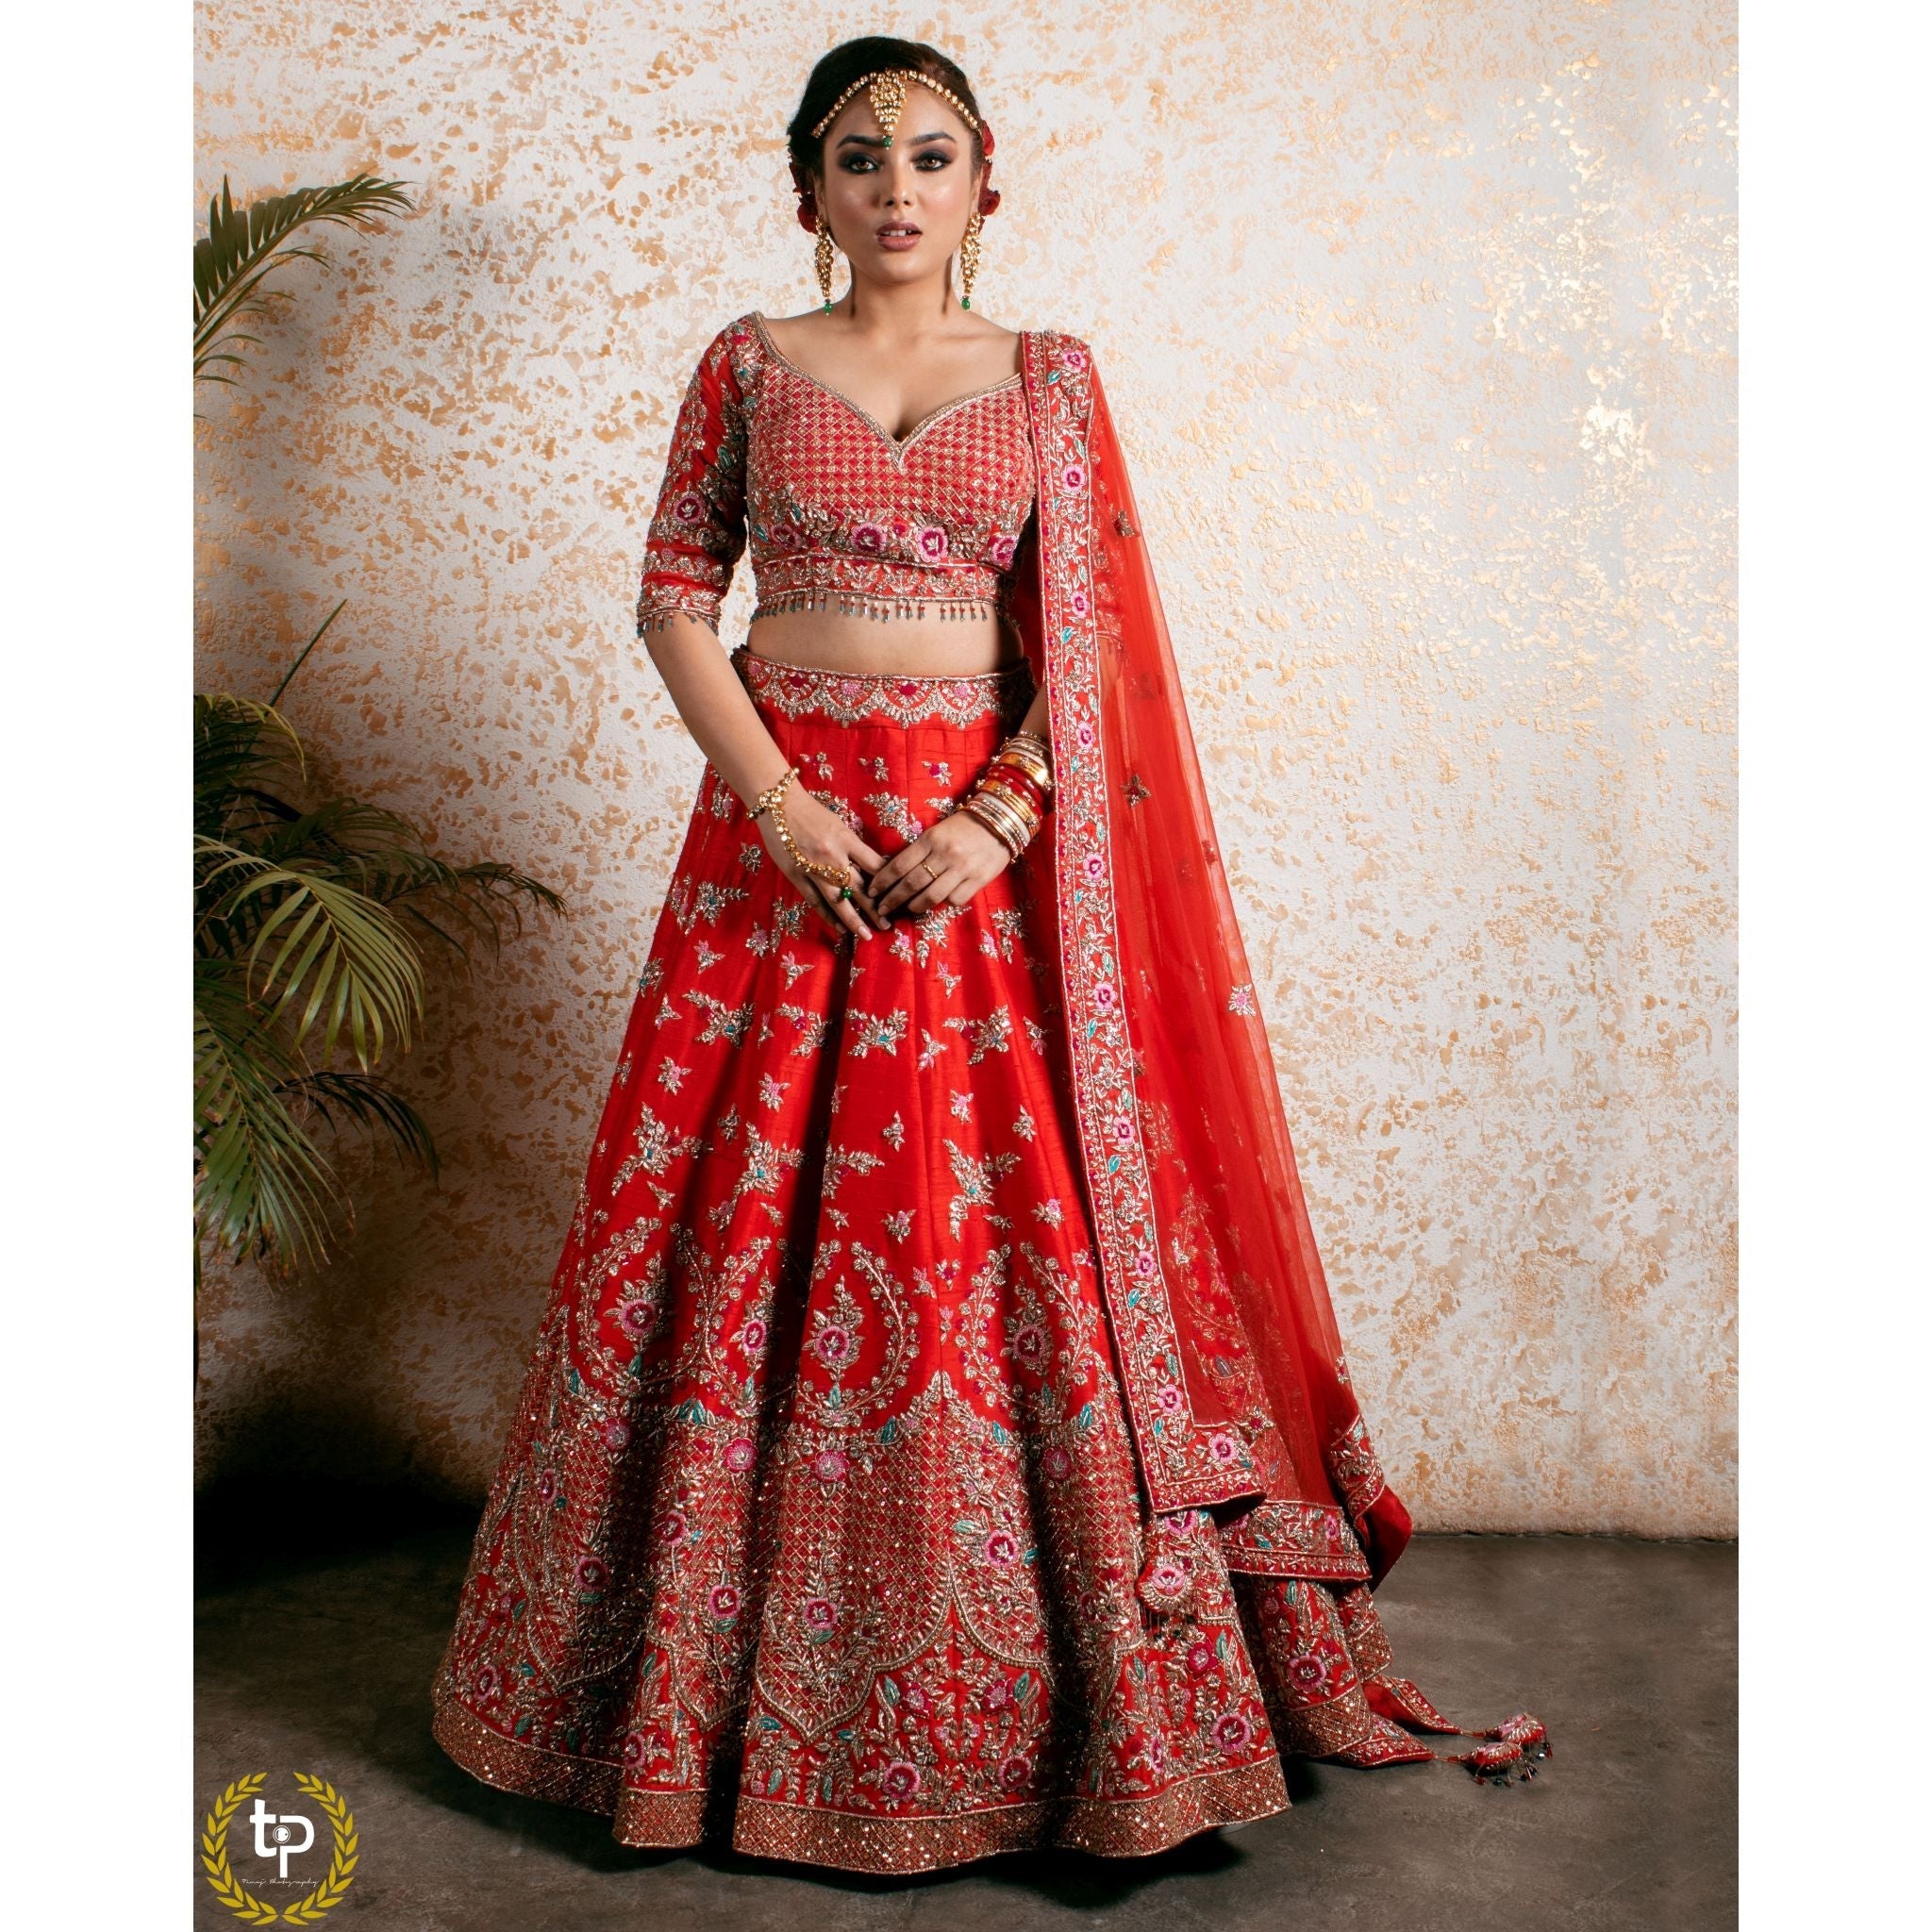 Red Colour Indian Wedding Lehenga Choli in Net Fabric.